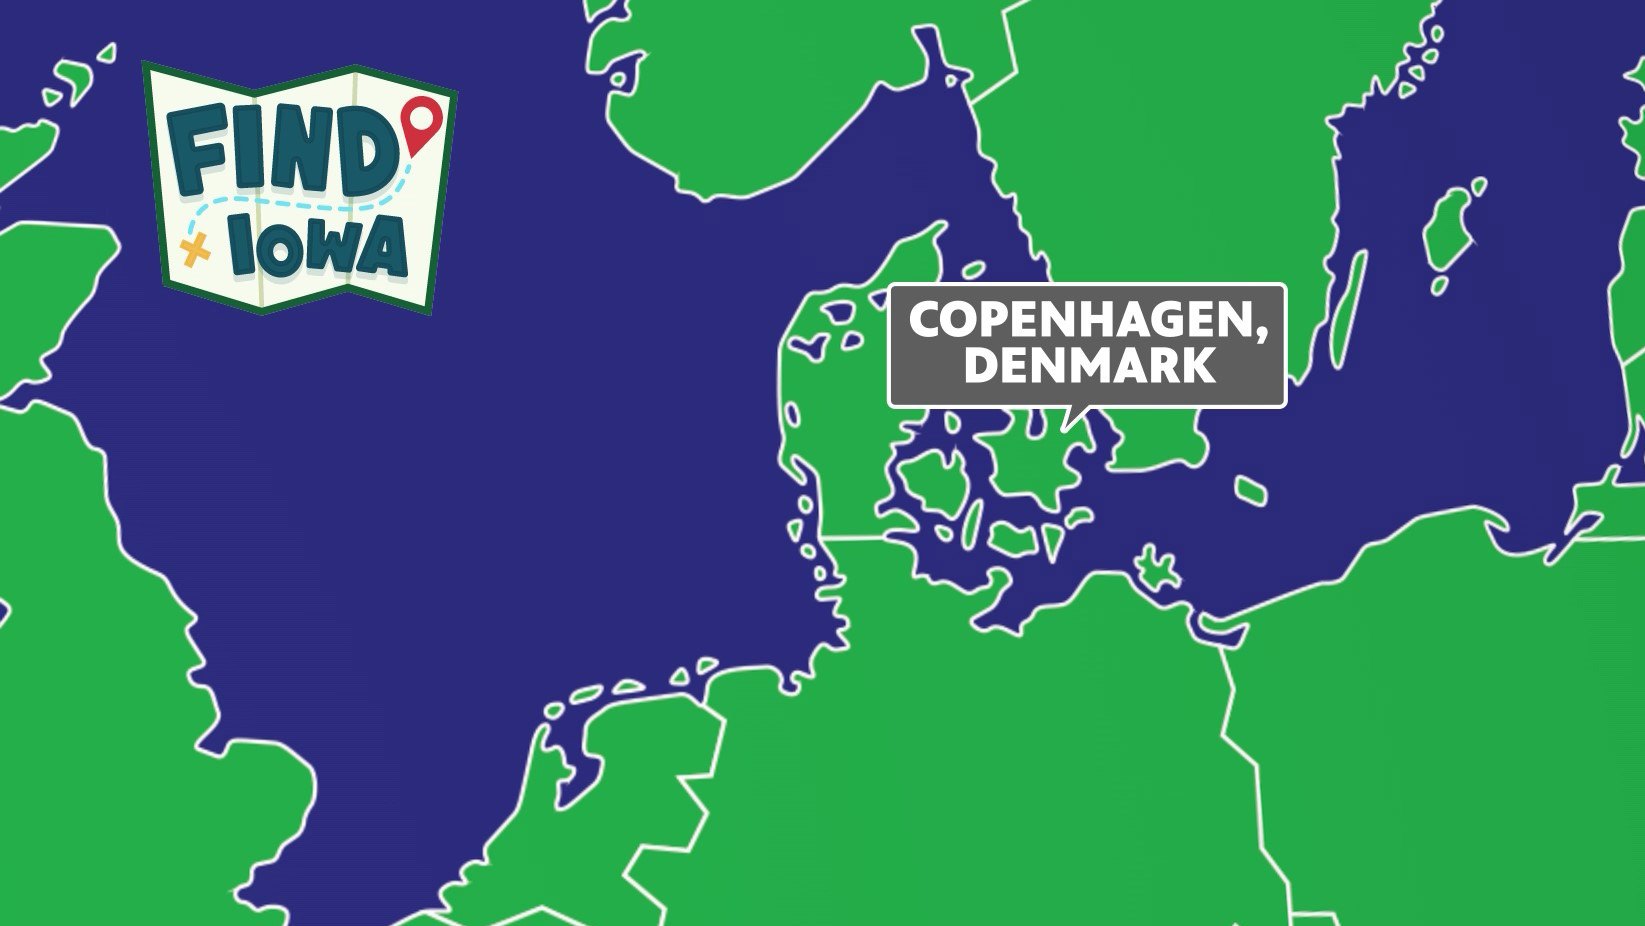 An image of Denmark with Copenhagen identified.